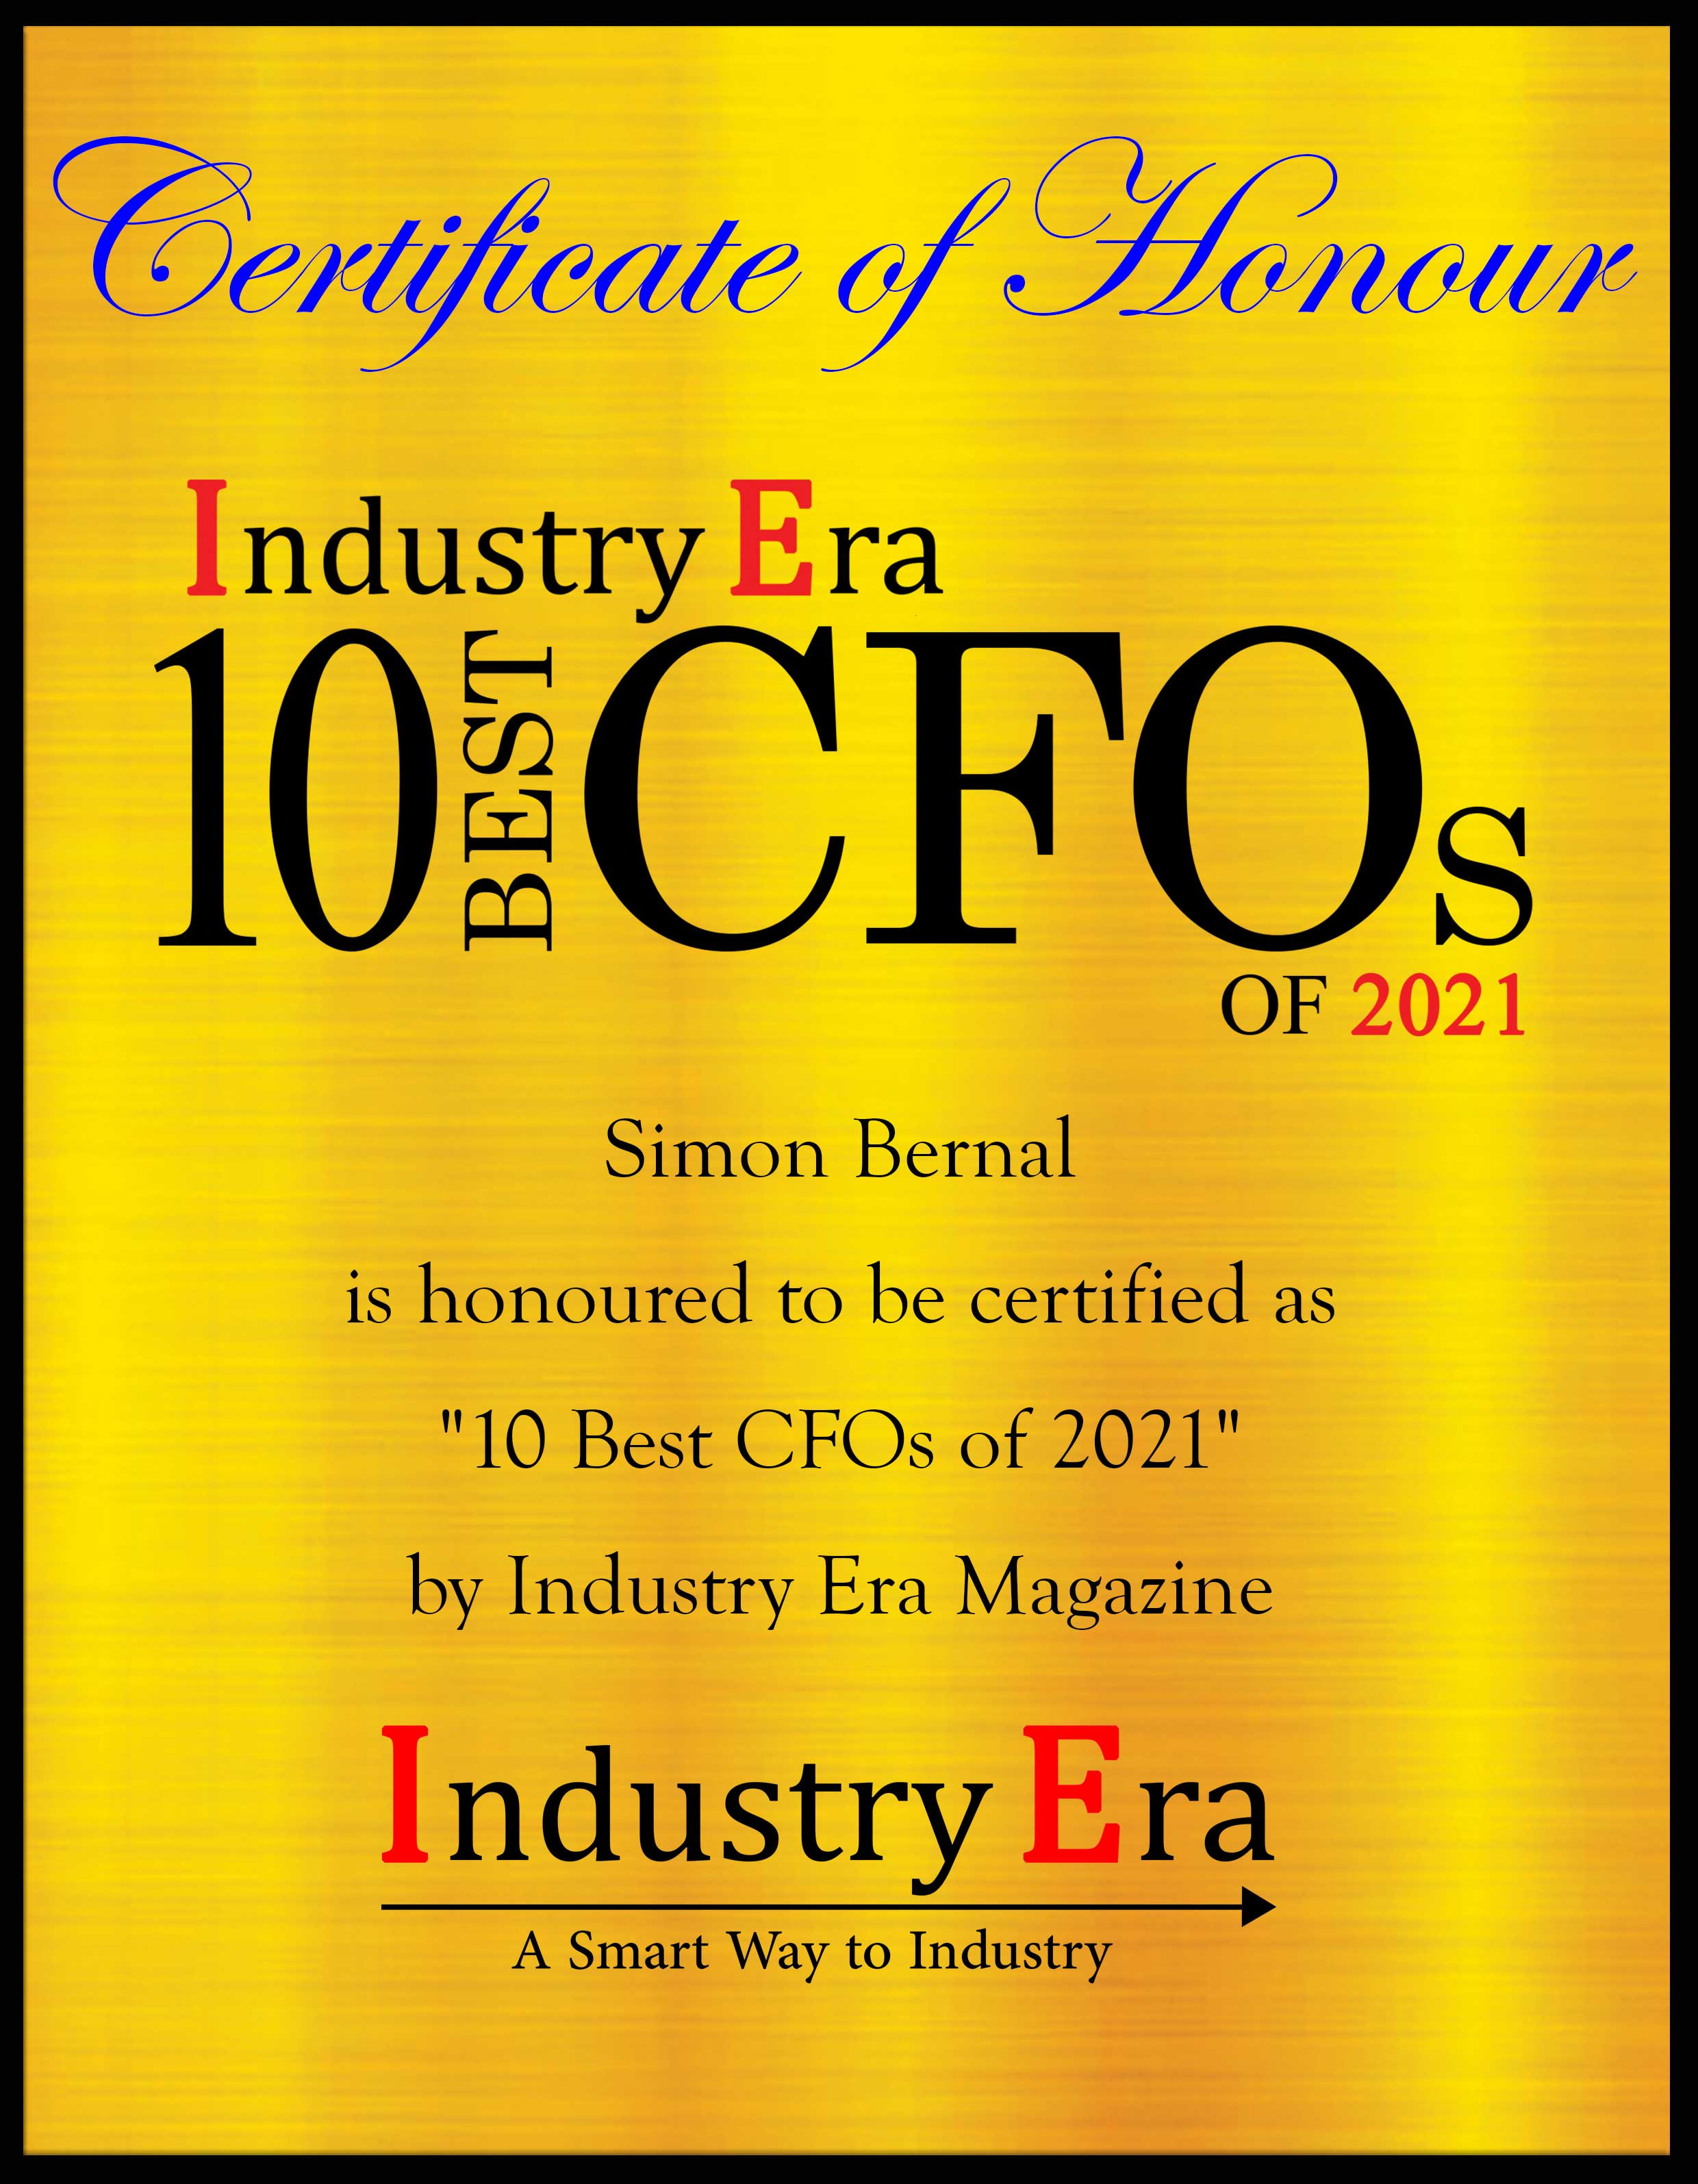 Simon Bernal, Global Executive Director & CFO of Toaster Certificate